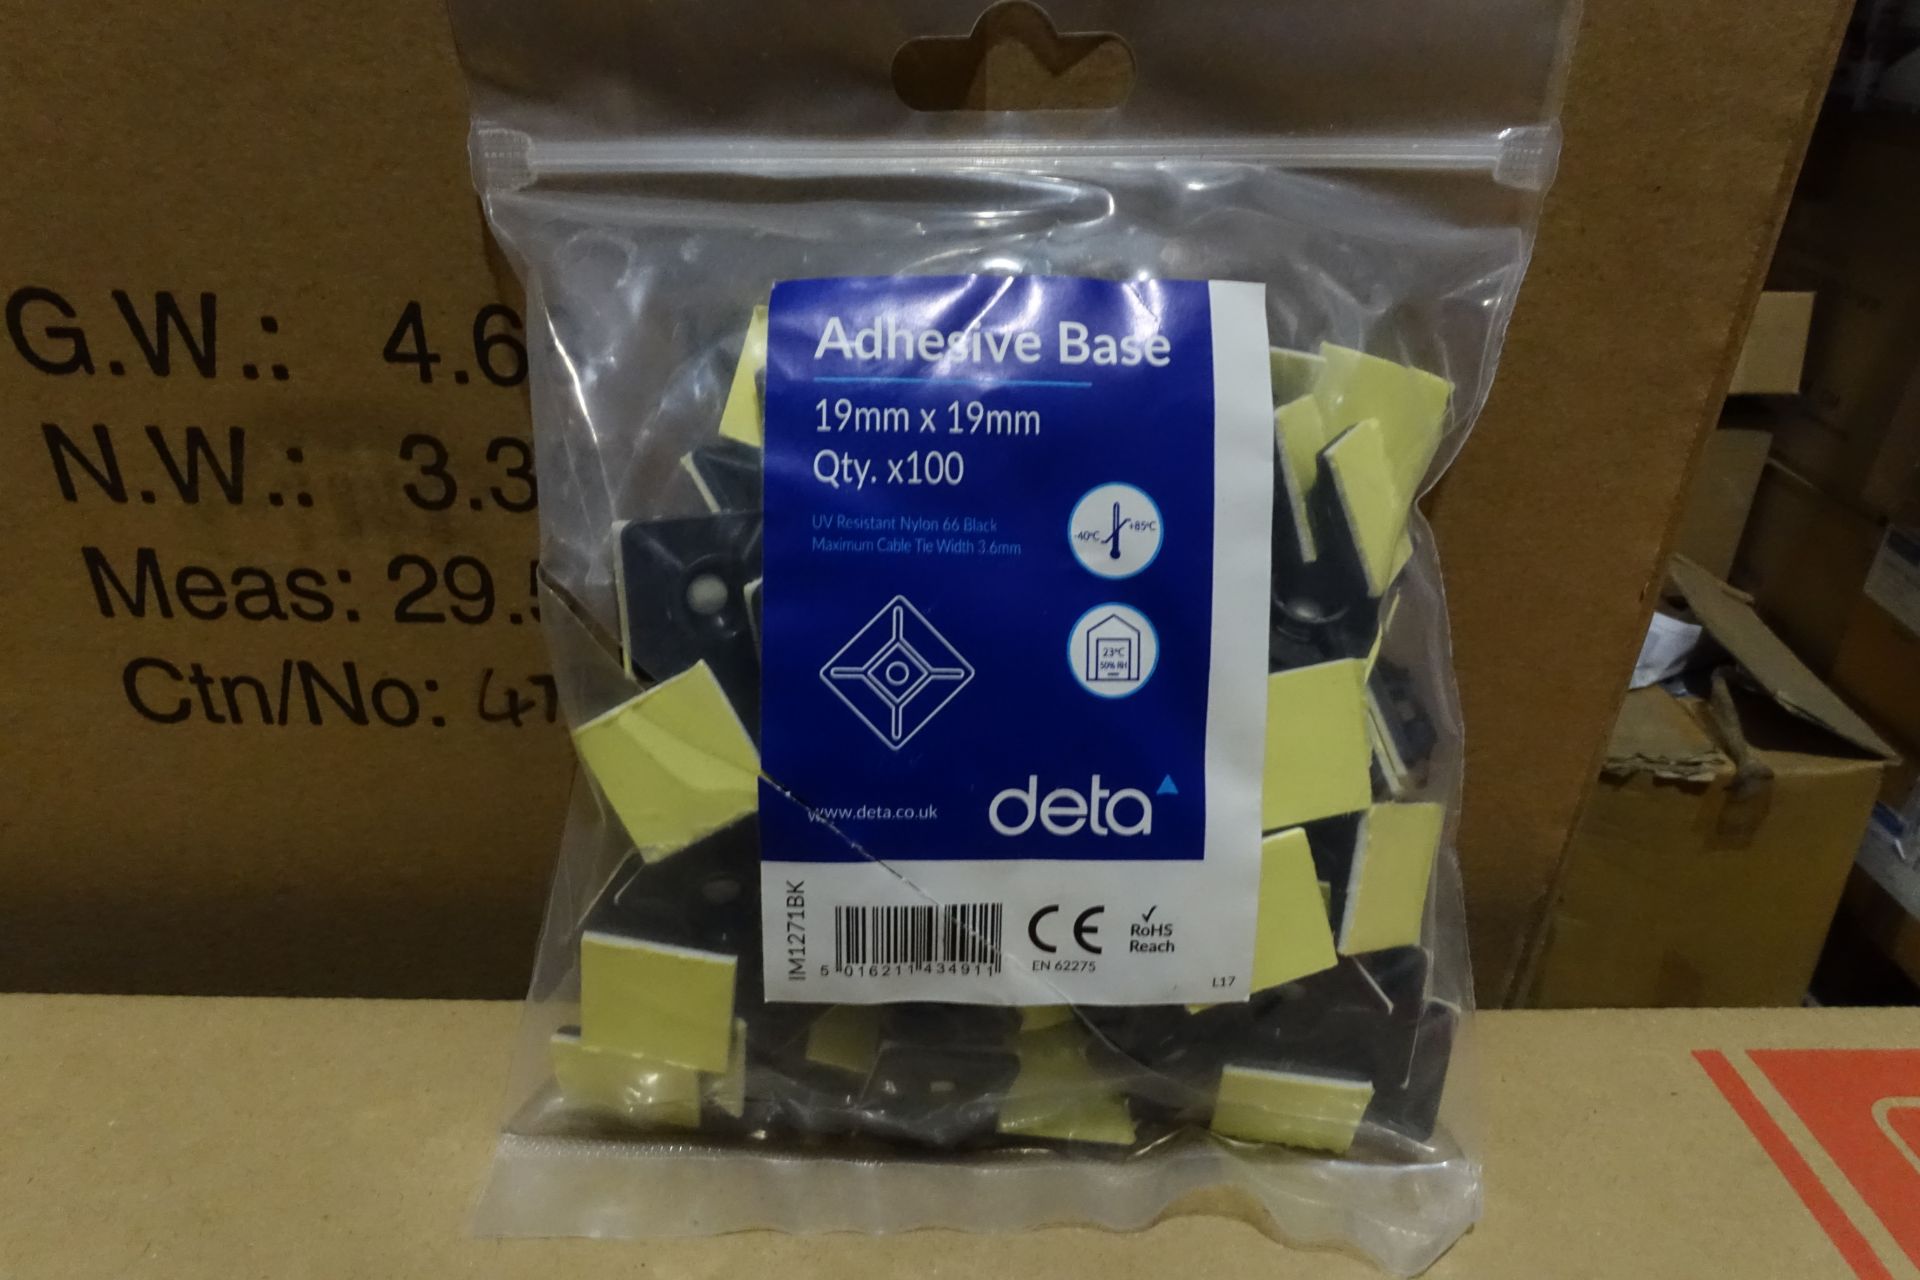 60 x Pack's of Deta IM1271BK Adhesive Base Pads 19mm x 19mm 100 Per Pack Black